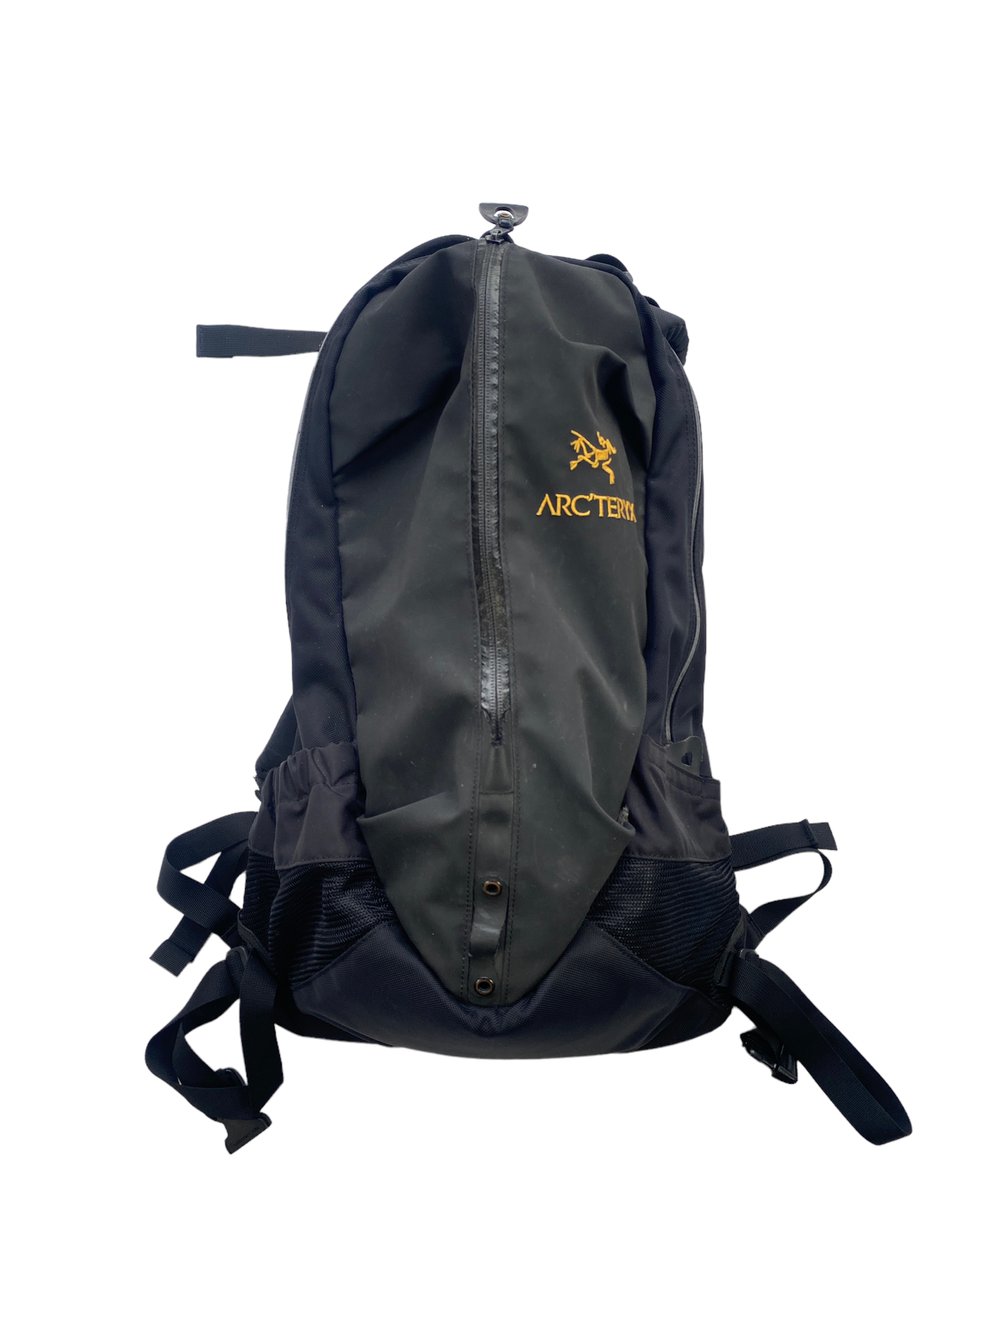 Arcteryx Arro 22 Backpack Black/Gold — RARETHREADS